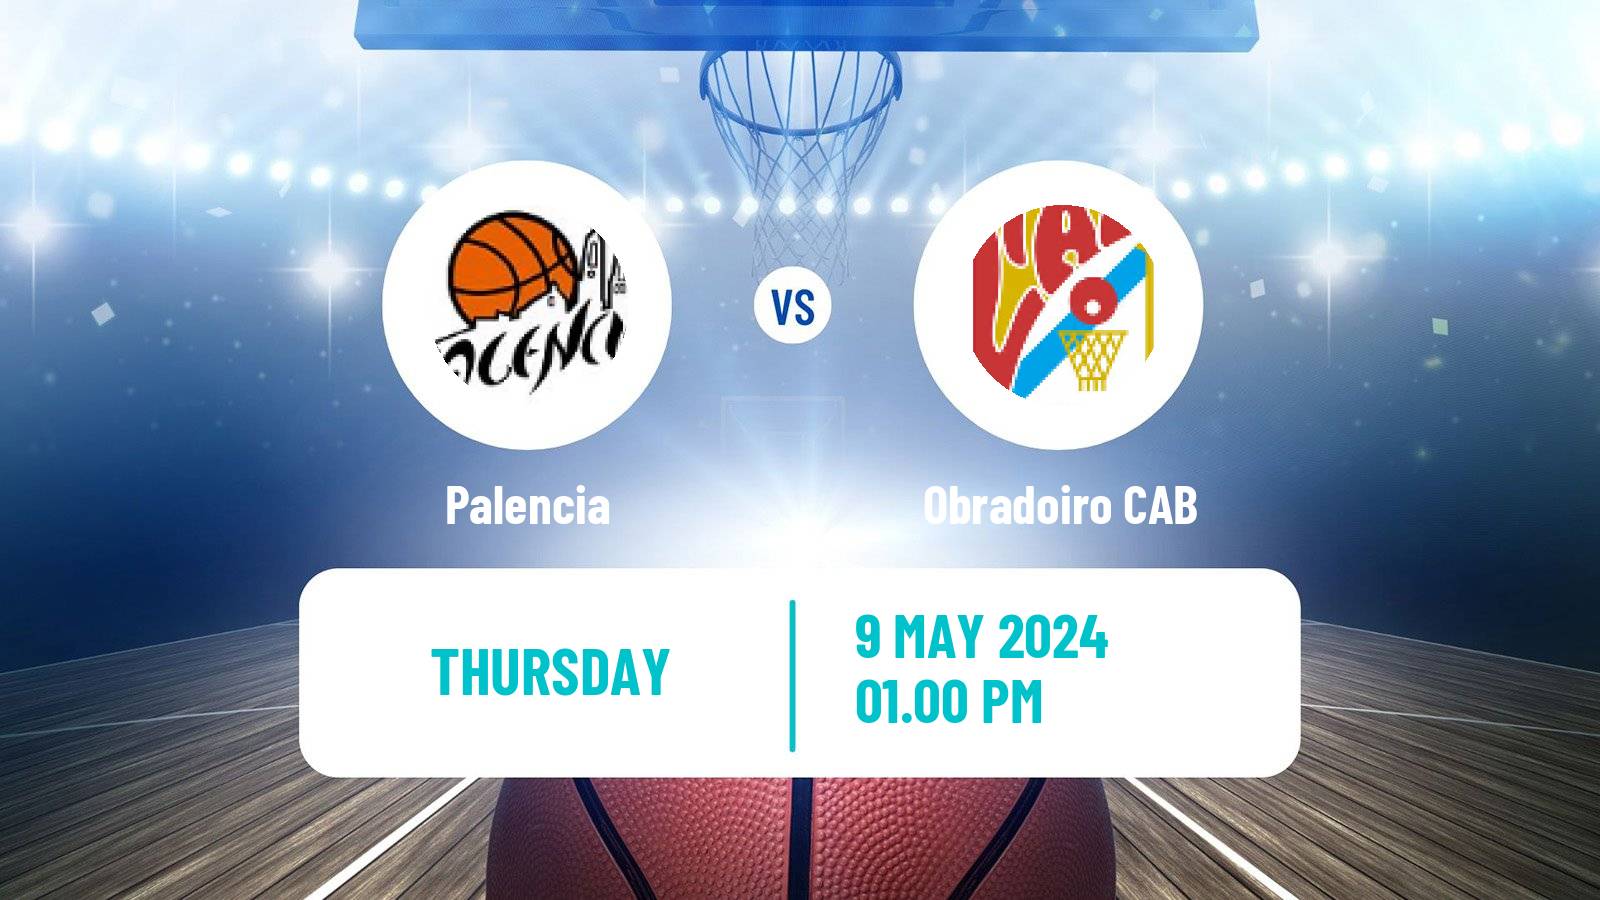 Basketball Spanish ACB League Palencia - Obradoiro CAB